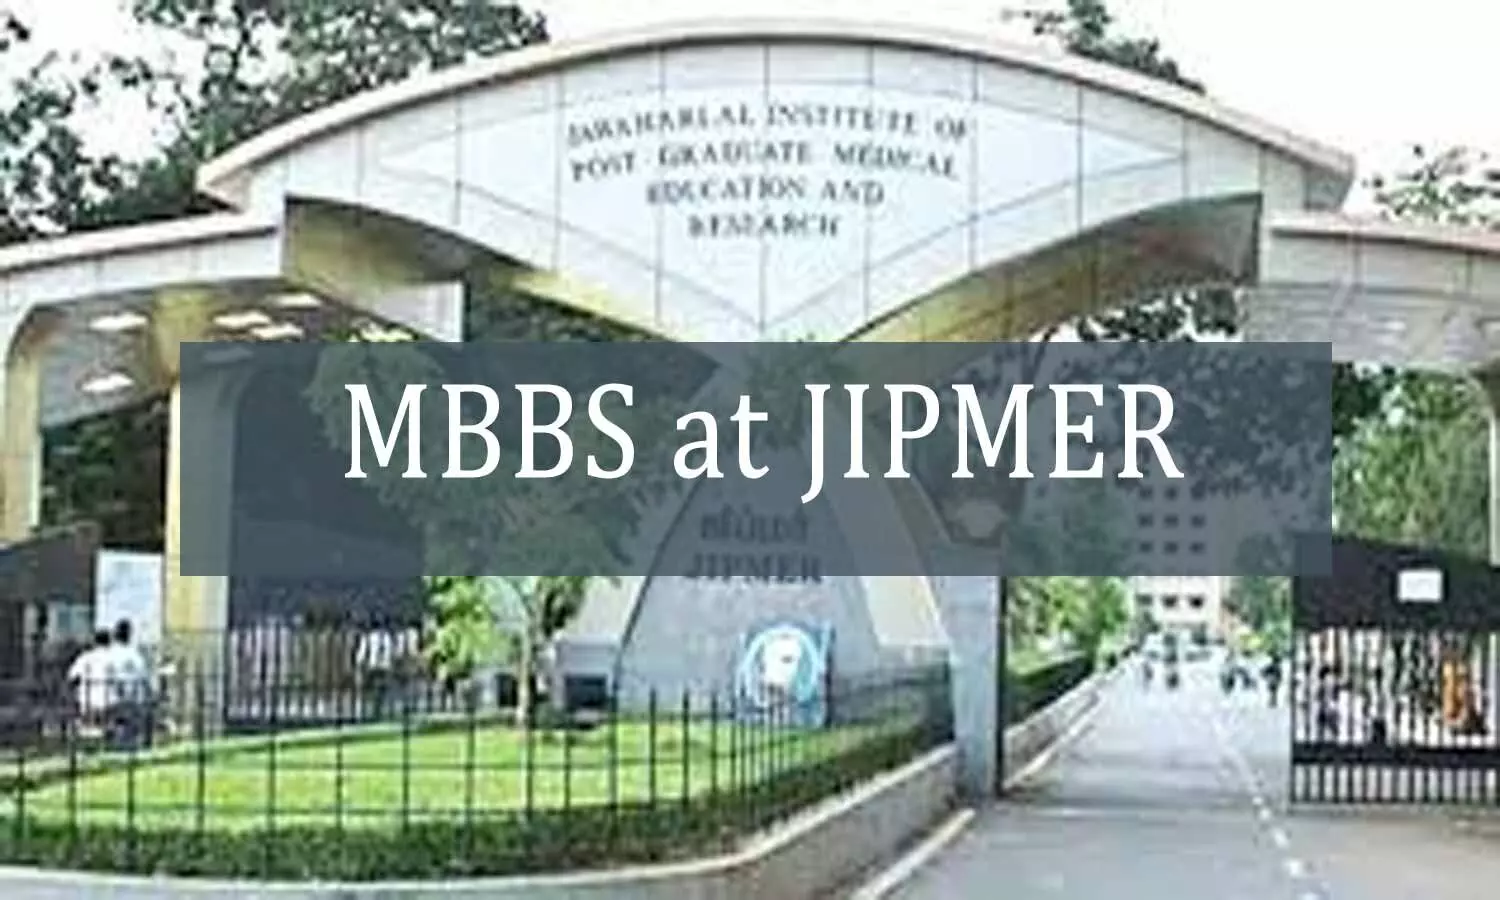 JIPMER recalls MBBS students batchwise, releases tentative schedule